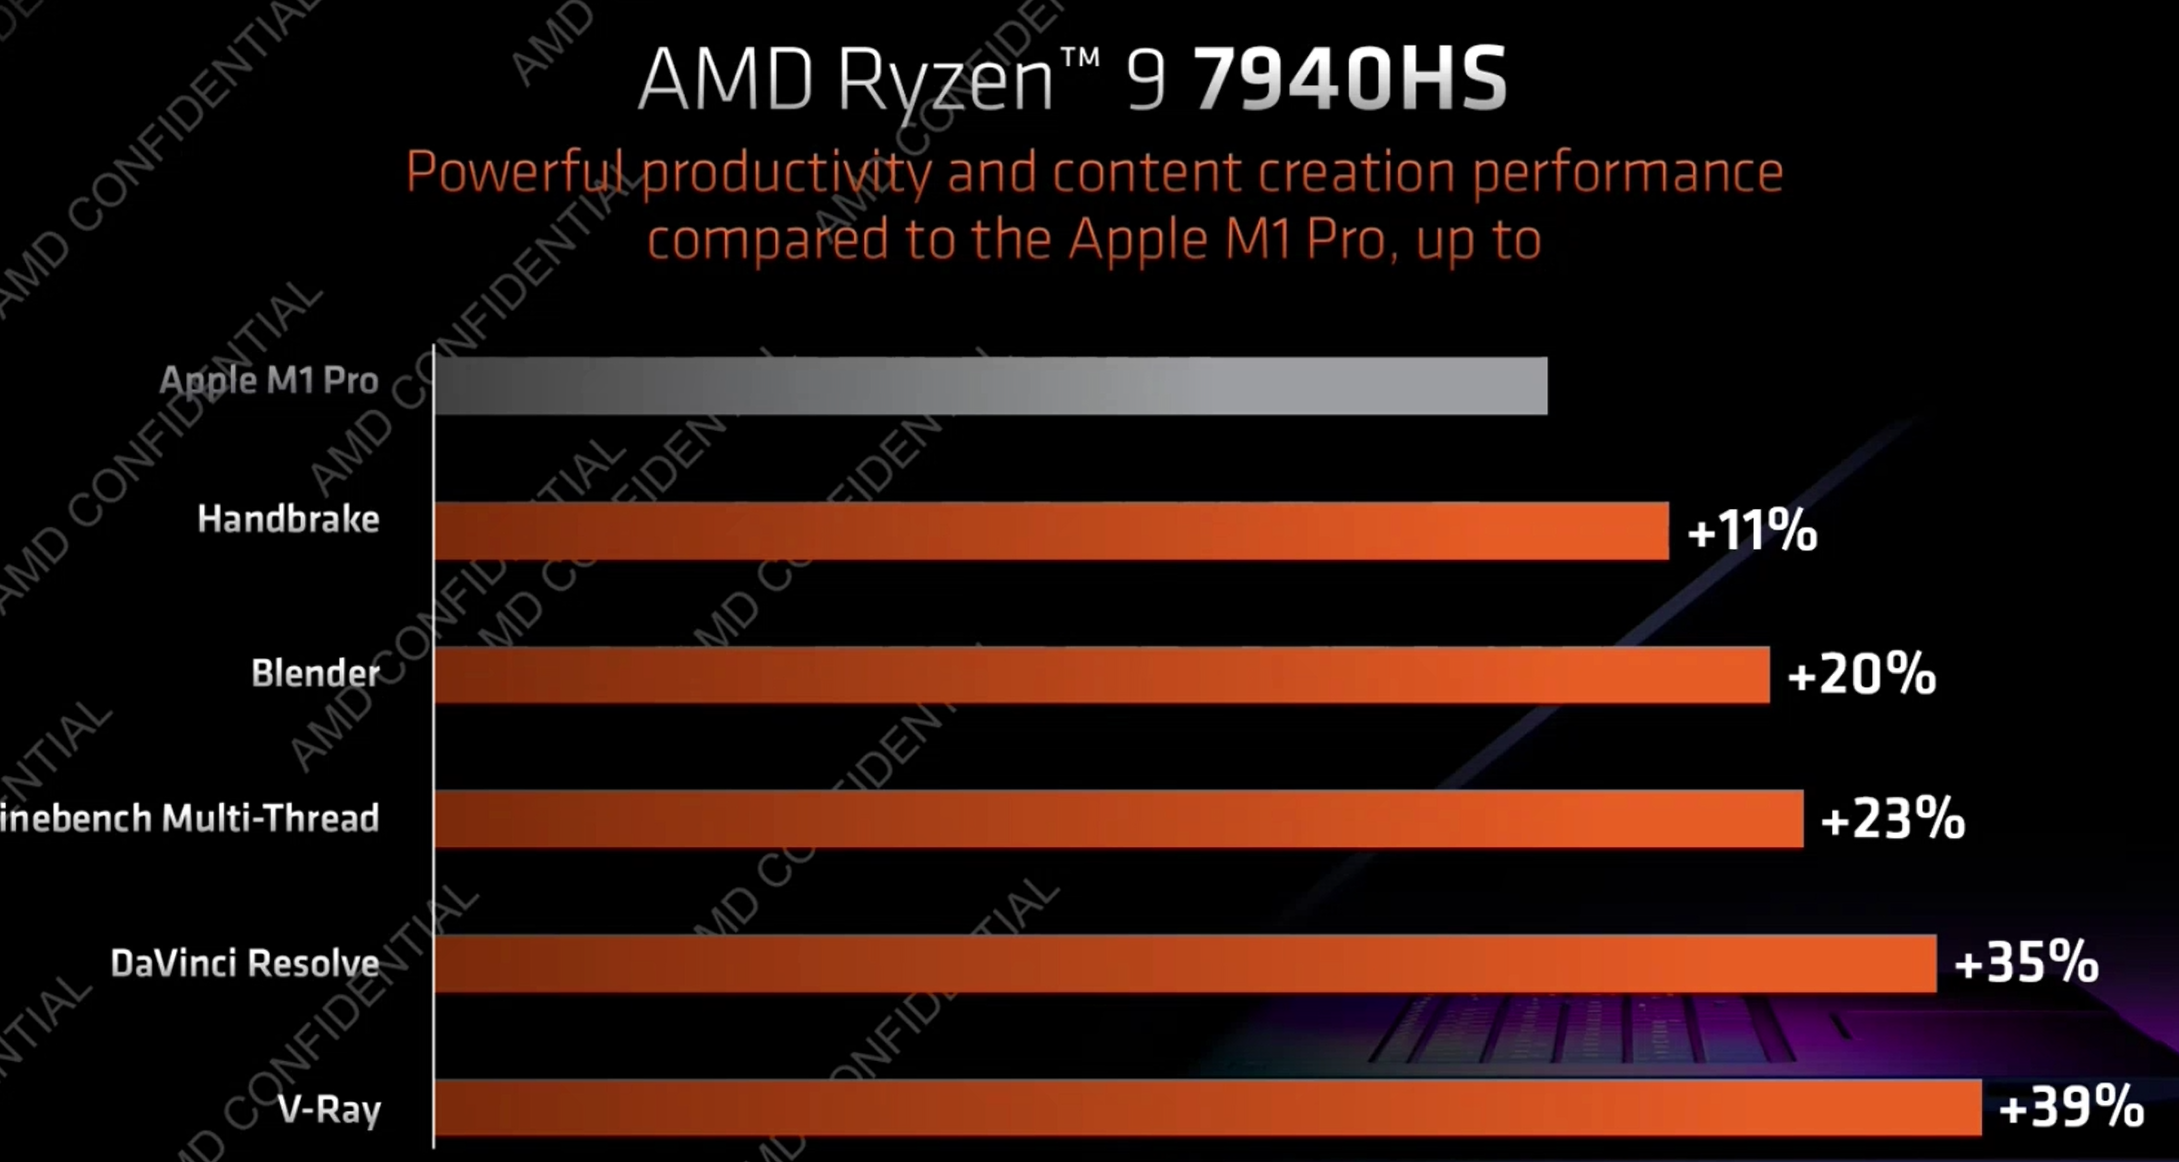 AMD Ryzen 9 7940HS mobile productivity